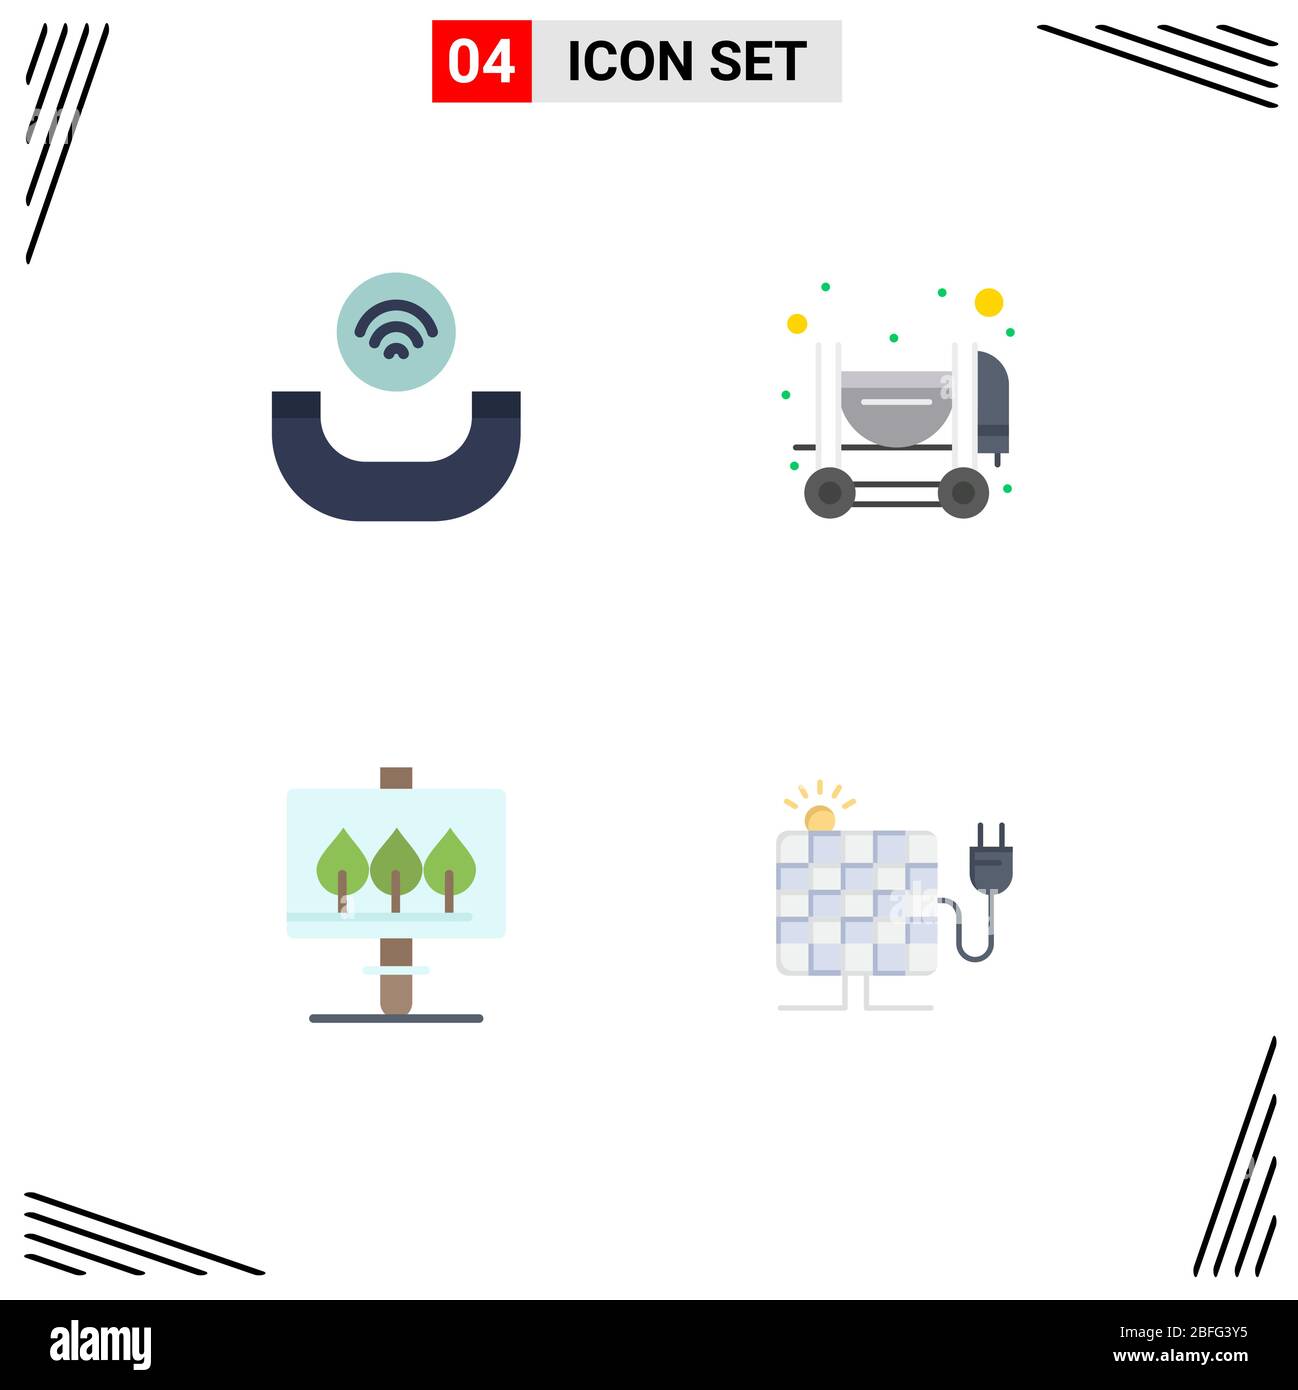 Modern Set of 4 Flat Icons Pictograph of call, energy, concrete, board, sun Editable Vector Design Elements Stock Vector